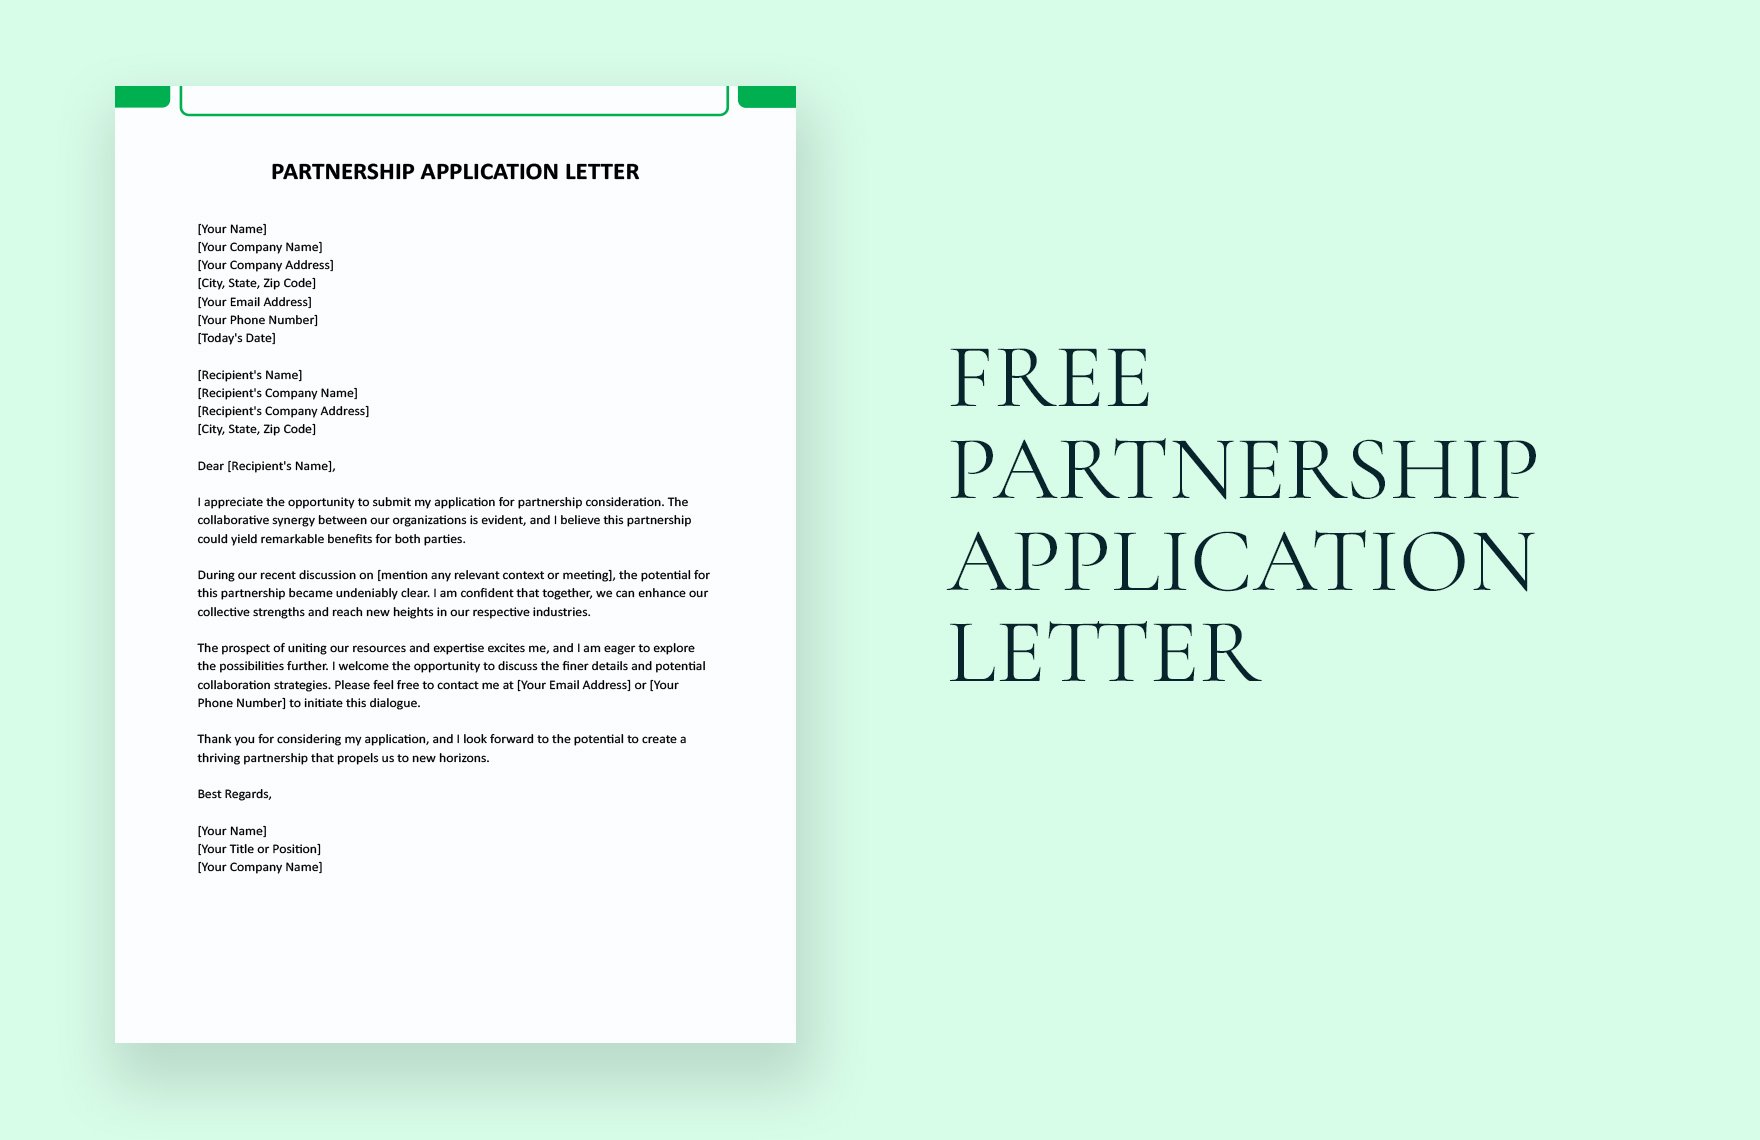 Partnership Application Letter